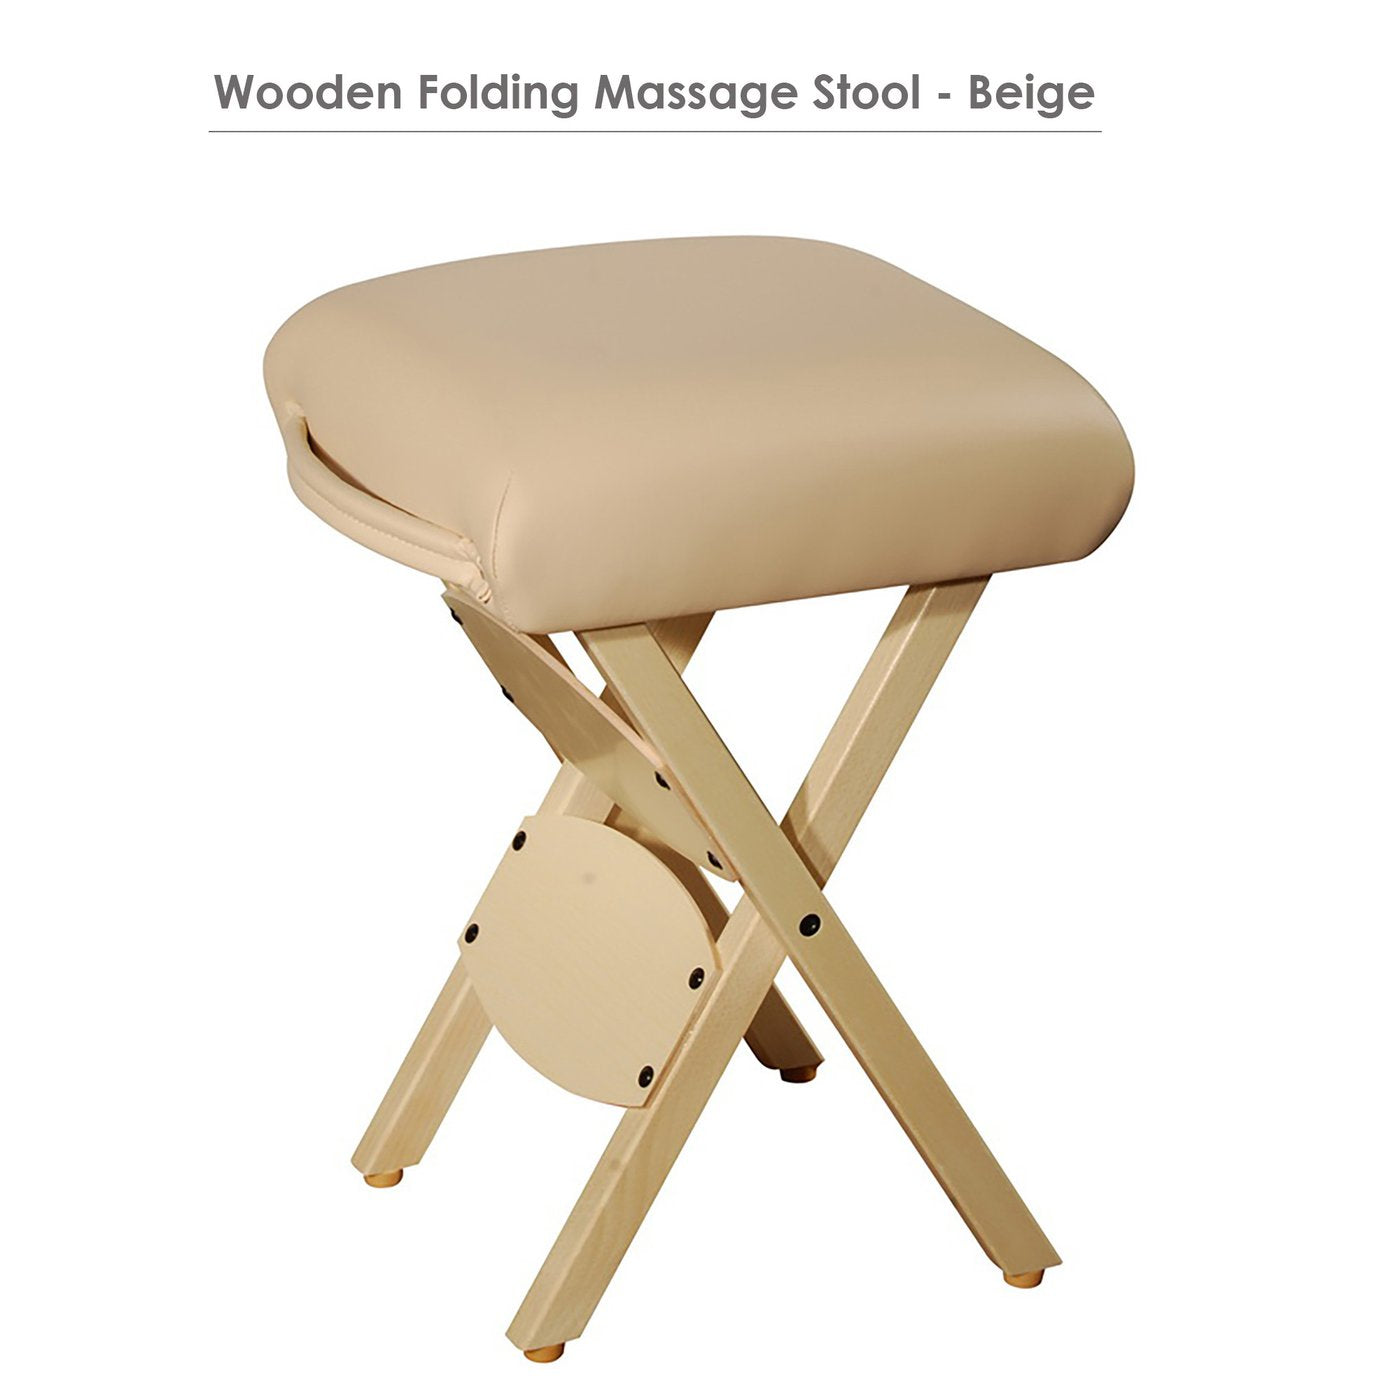 Wooden Folding Massage Stool